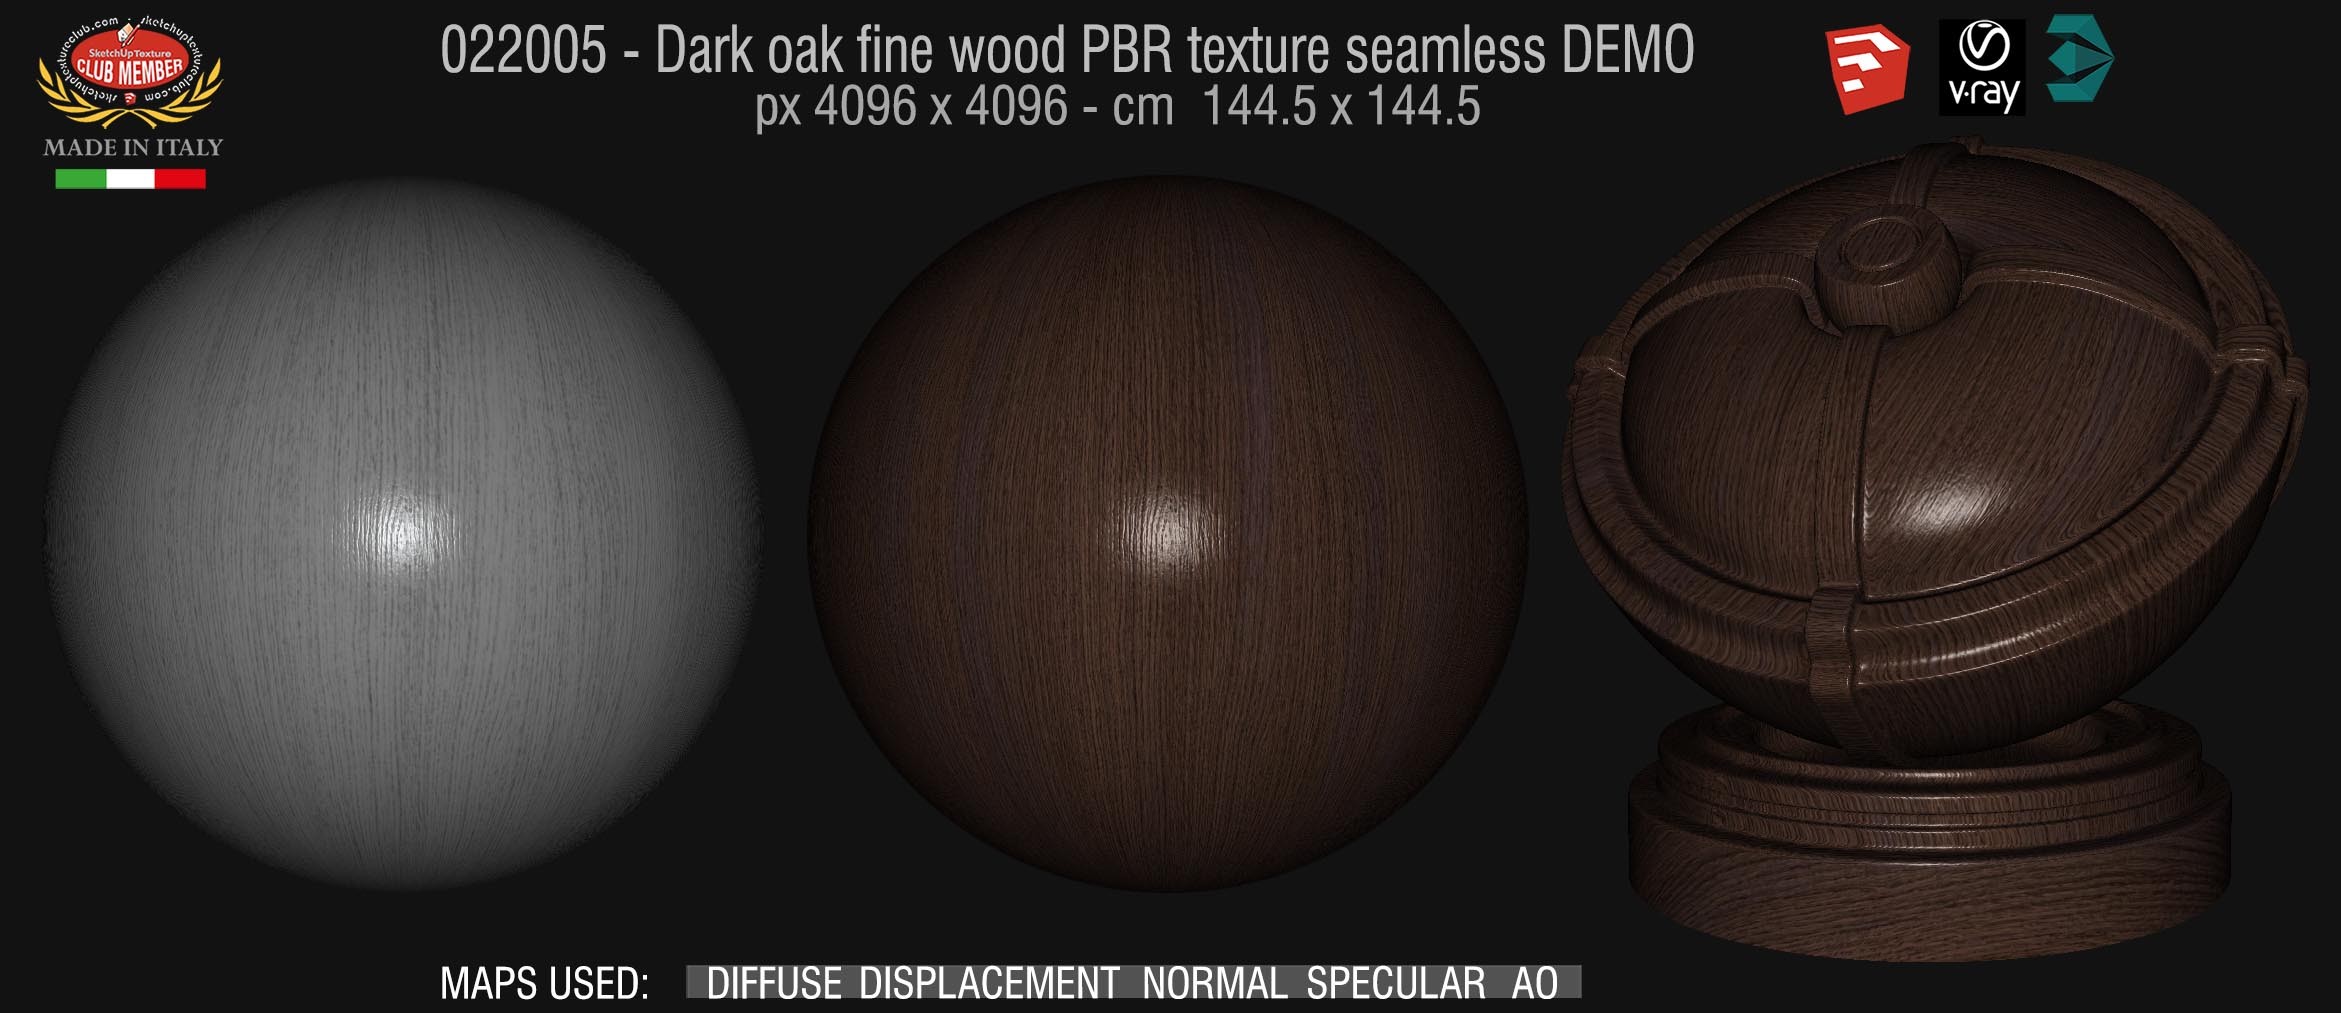 22005 Dark oak fine wood PBR texture seamless DEMO